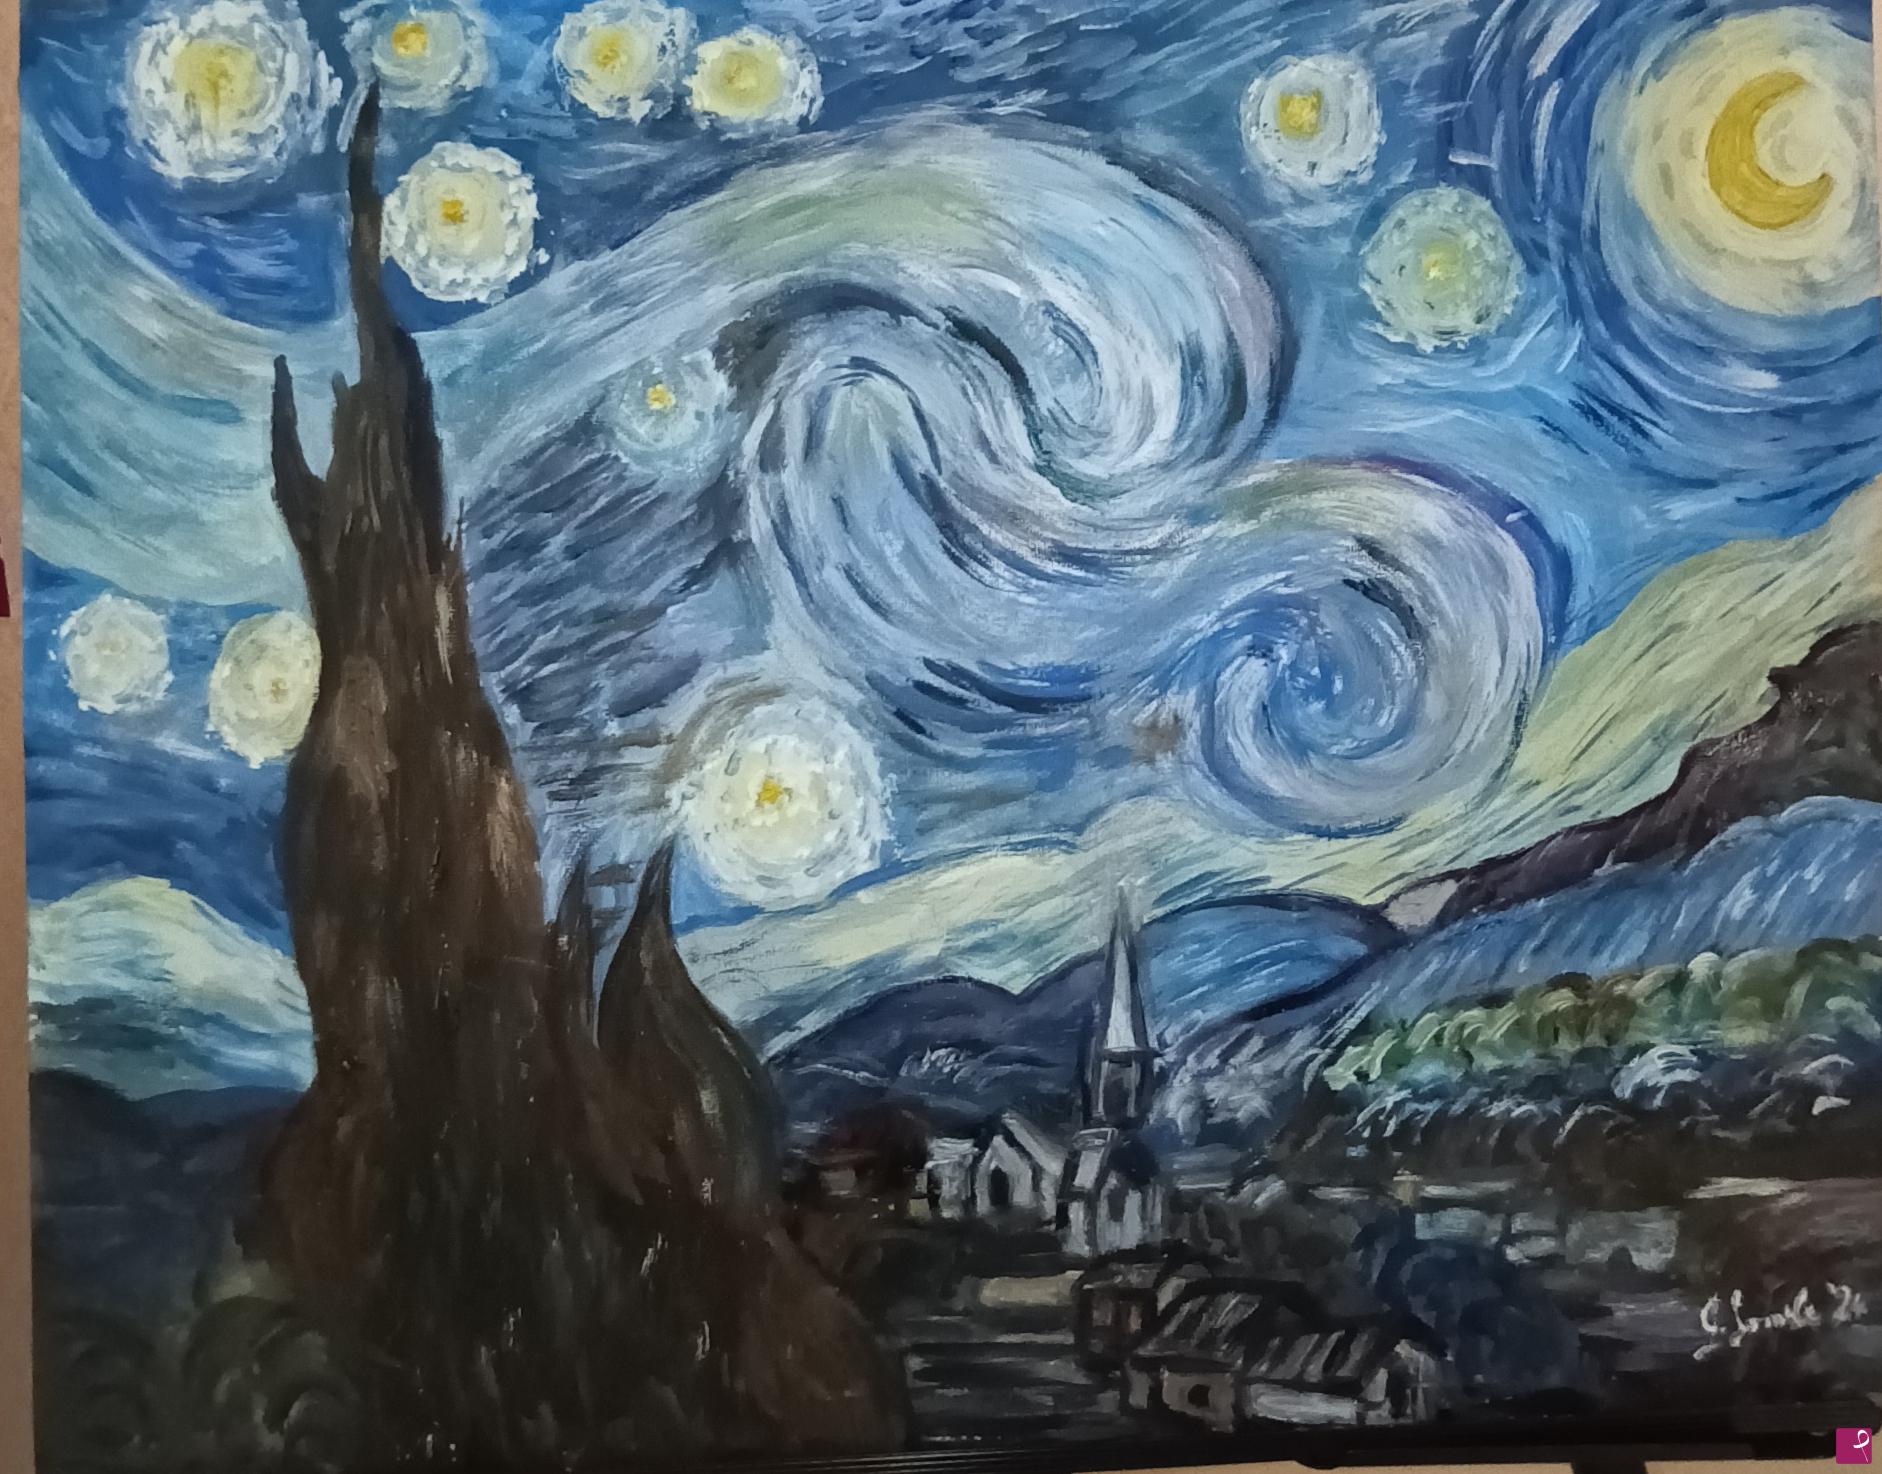 Tuttiperunounopertutti: La notte stellata di Van Gogh (Semino)